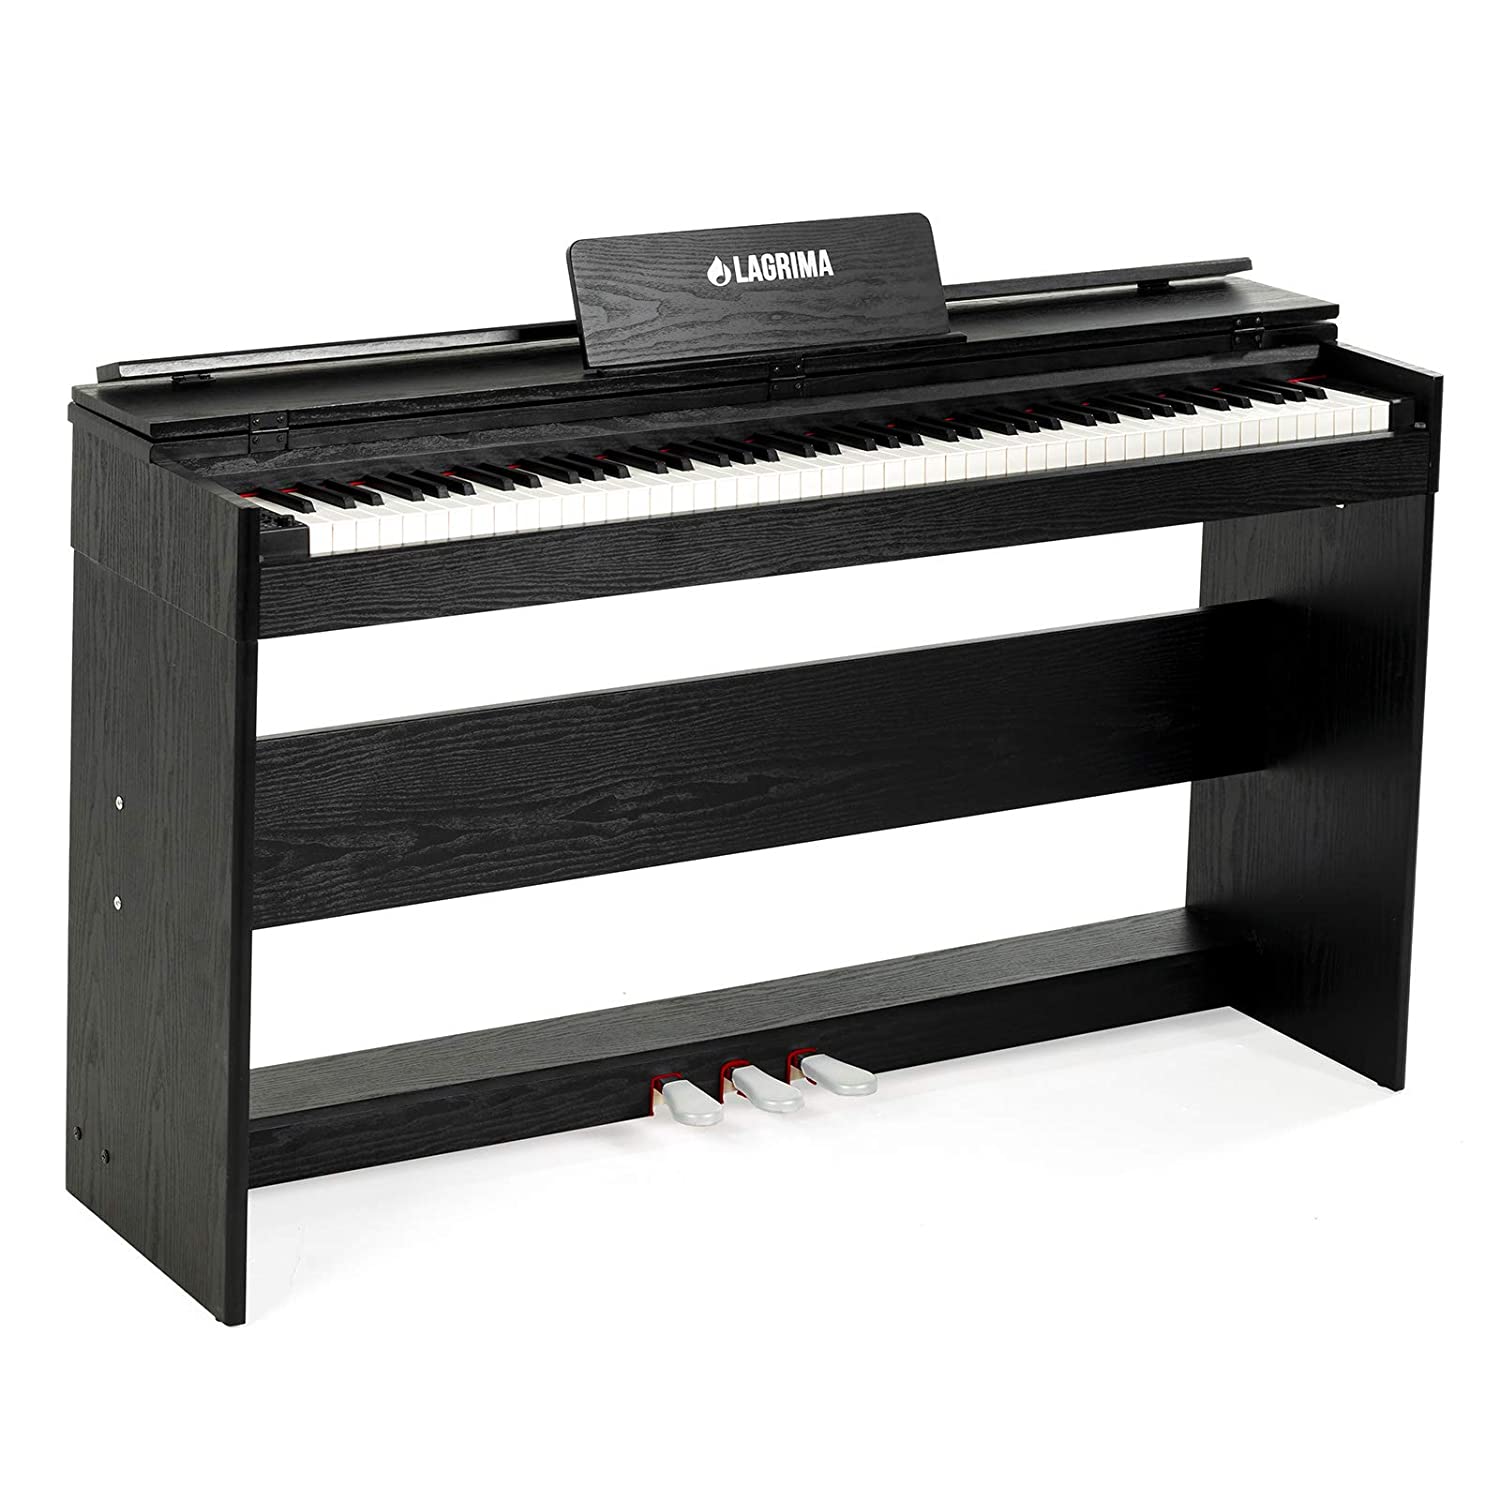 LAGRIMA 88 Weighted Key Digital Piano, USB/MIDI/Headphone/Mic/Audio Output Feature